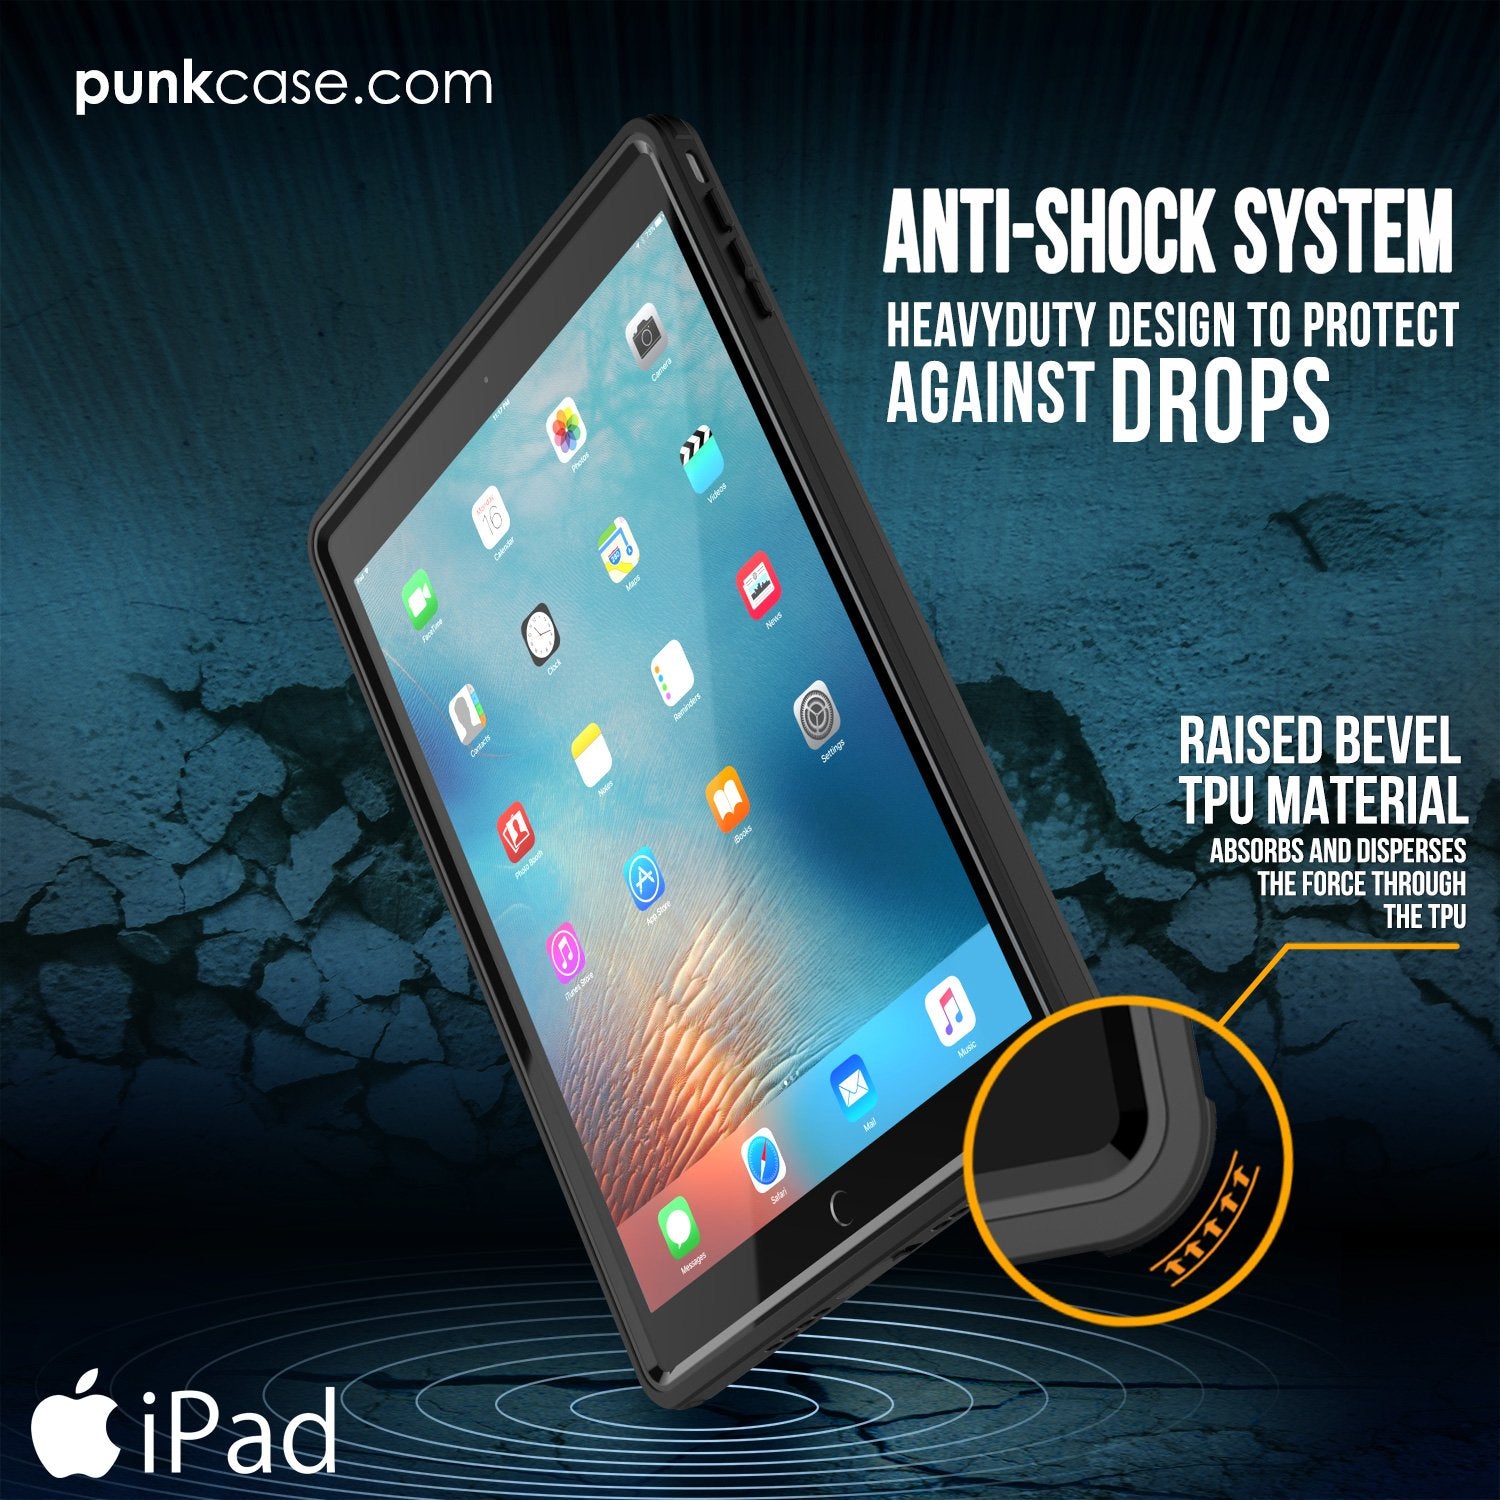 Punkcase iPad Pro 9.7 Case CRYSTAL Series Waterproof Cover [Black]